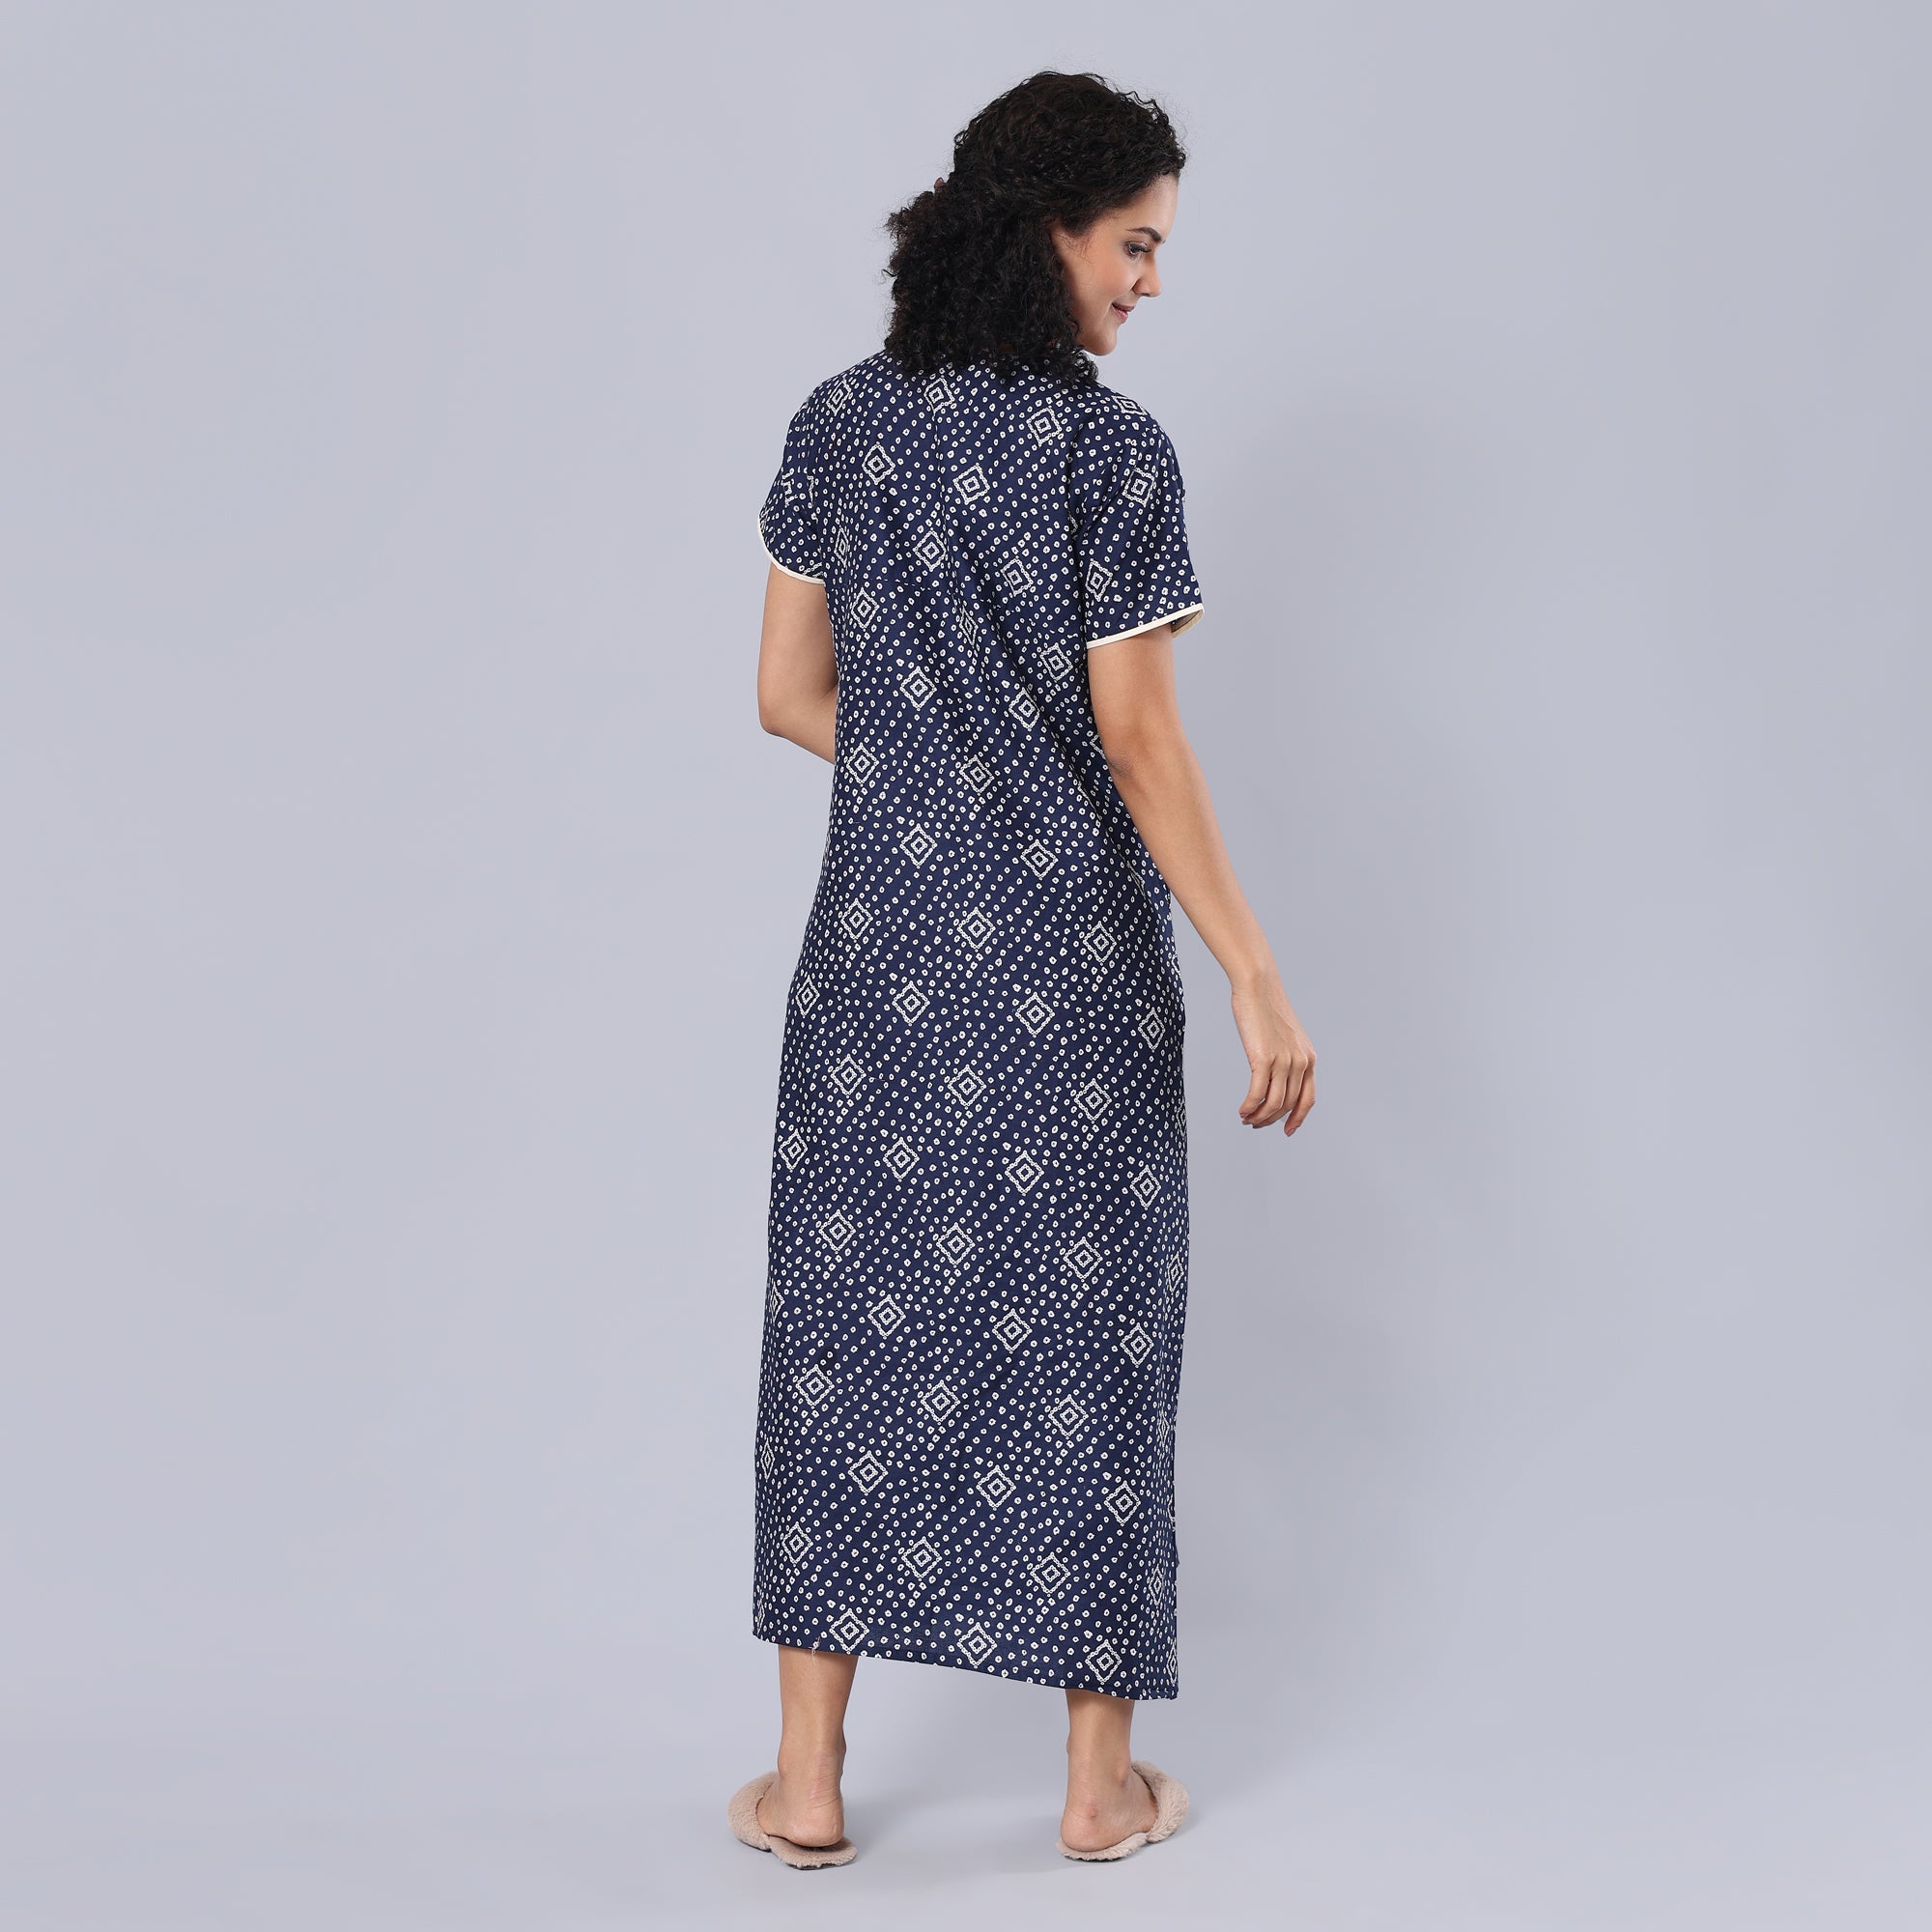 Evolove Women's 100% Cotton Printed Maxi Nighty Sleepwear Super Comfortable & Soft Cotton